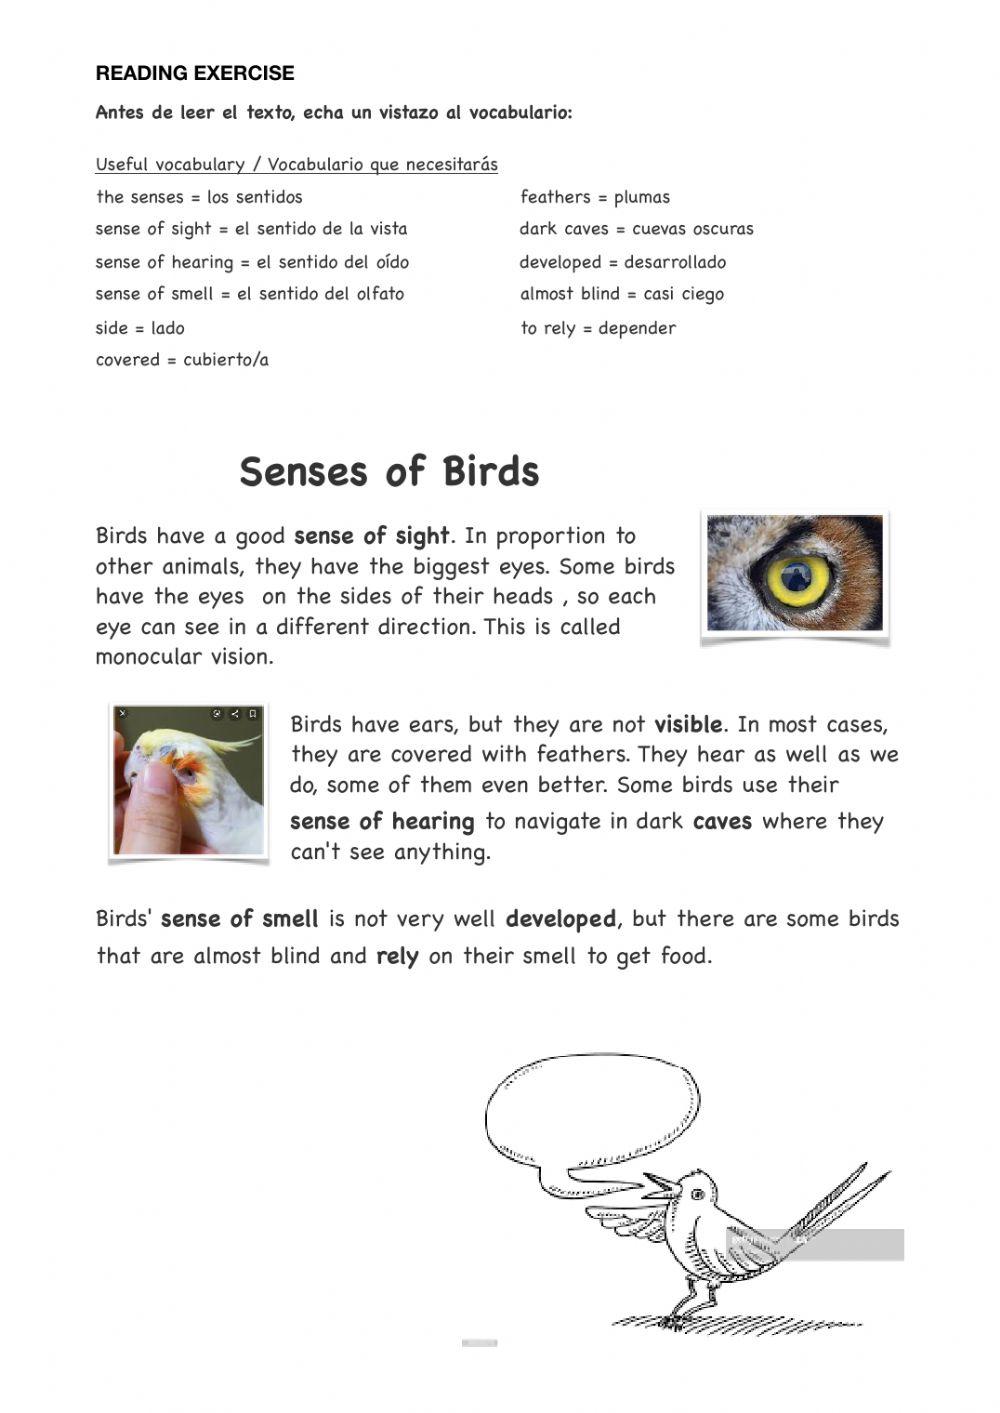 Senses of birds